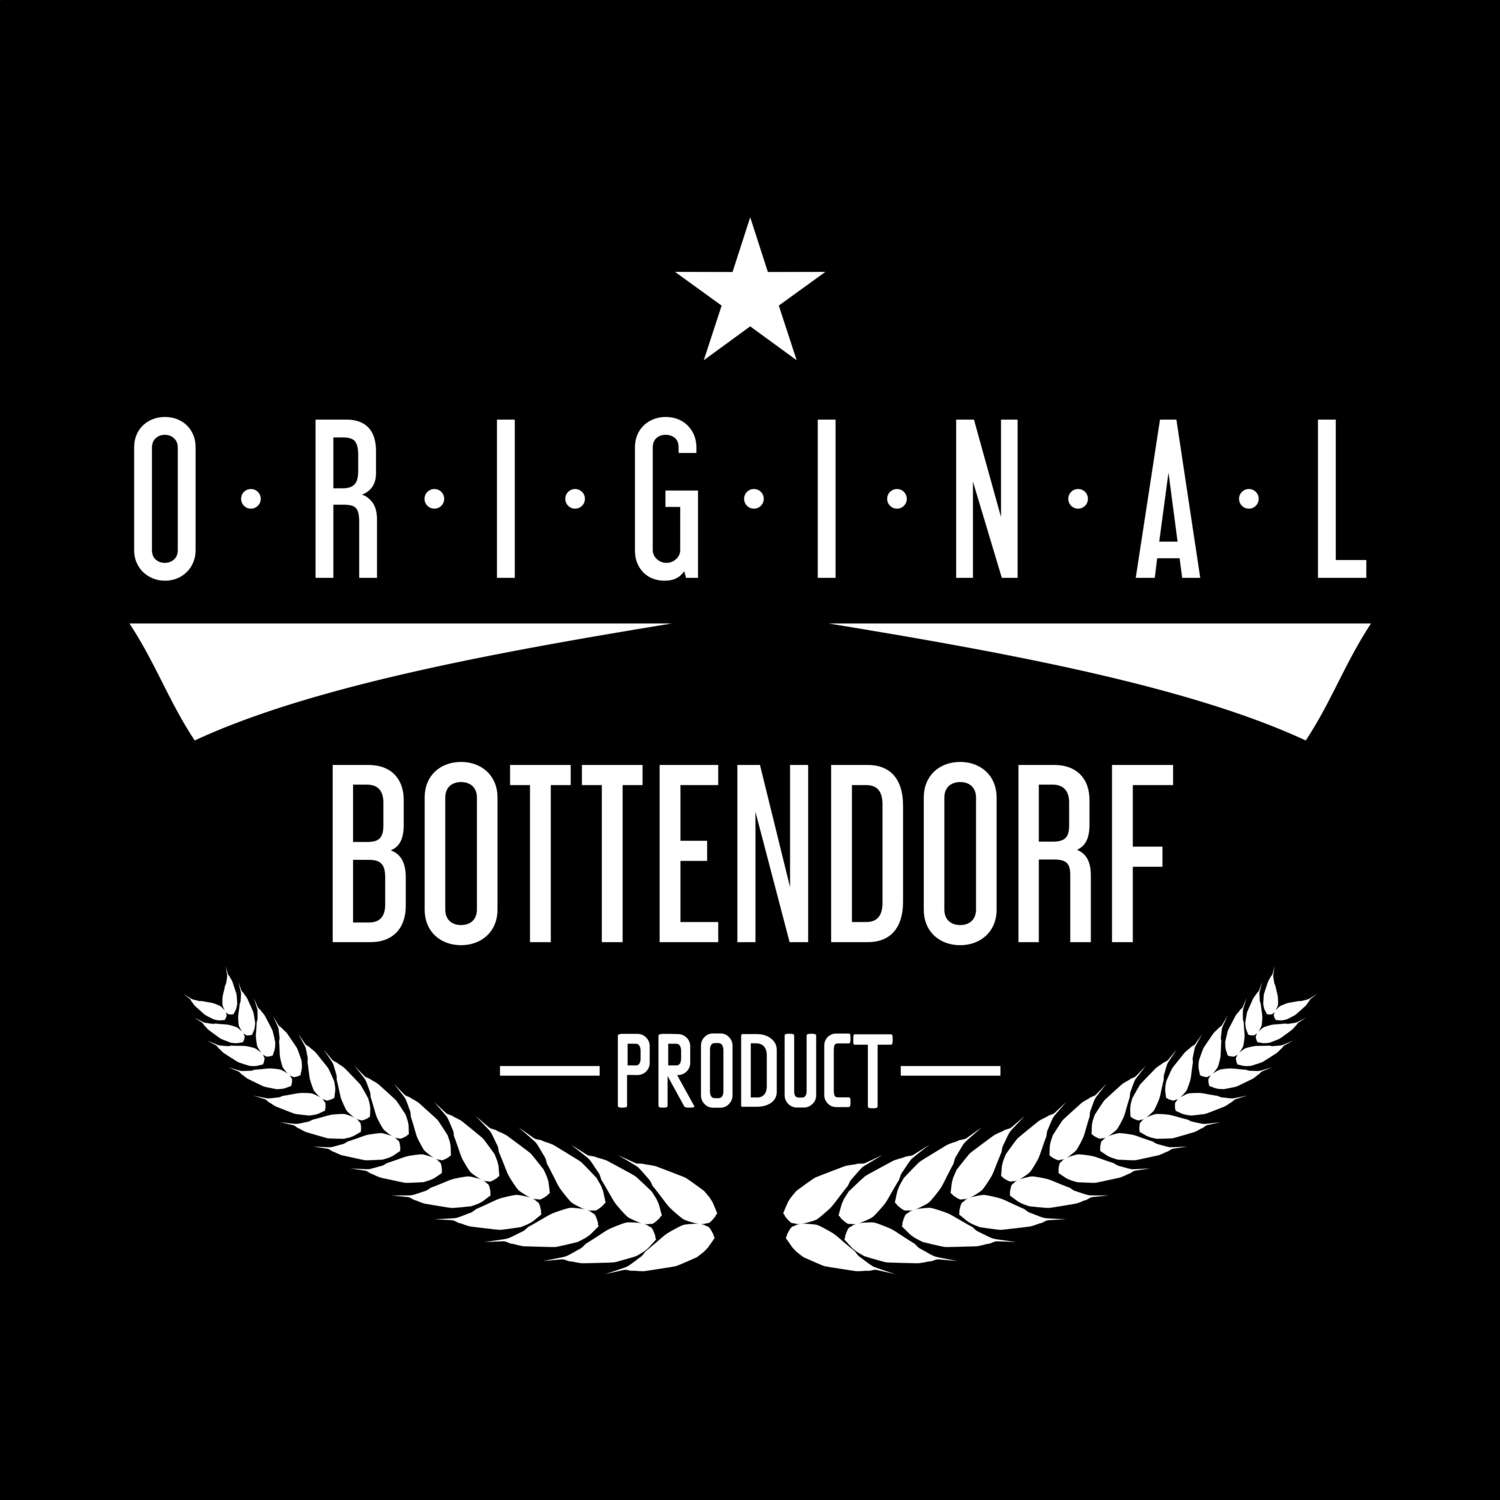 Bottendorf T-Shirt »Original Product«